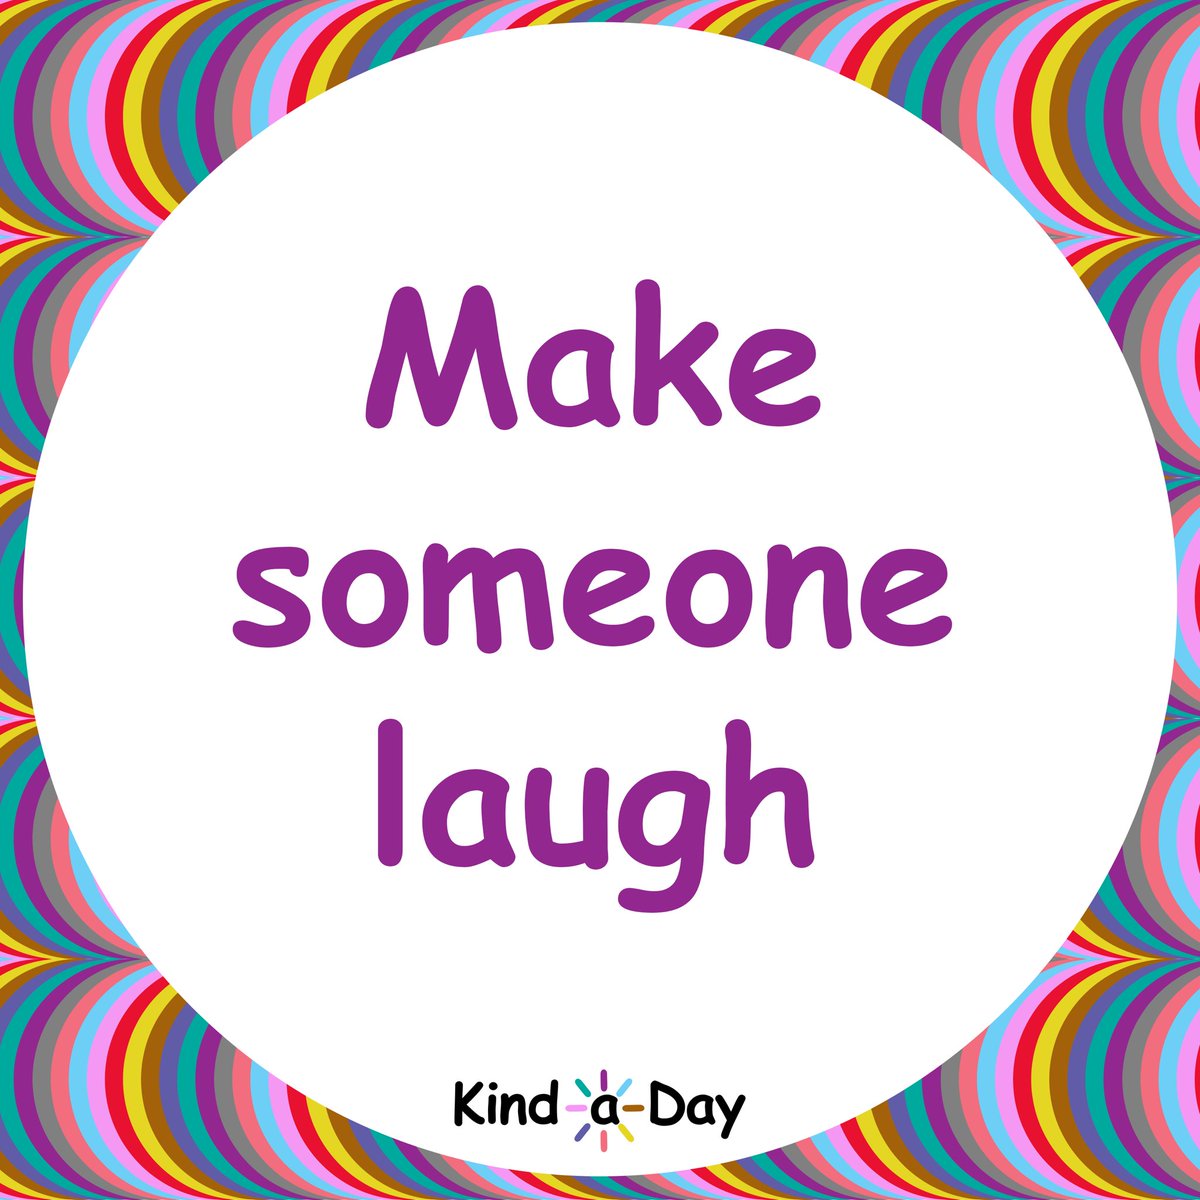 Tuesday Tip: Make someone laugh 😂 
 
#laugh #MakeSomeoneLaugh #LaughMore #kind #BeKind #kindness #KindLife #ActsOfKindness #SpreadKindness #KindnessMatters #ChooseKindness #KindnessWins #KindaDay #KindnessAlways #KindnessEveryday #Kindness365 #KindnessChallenge